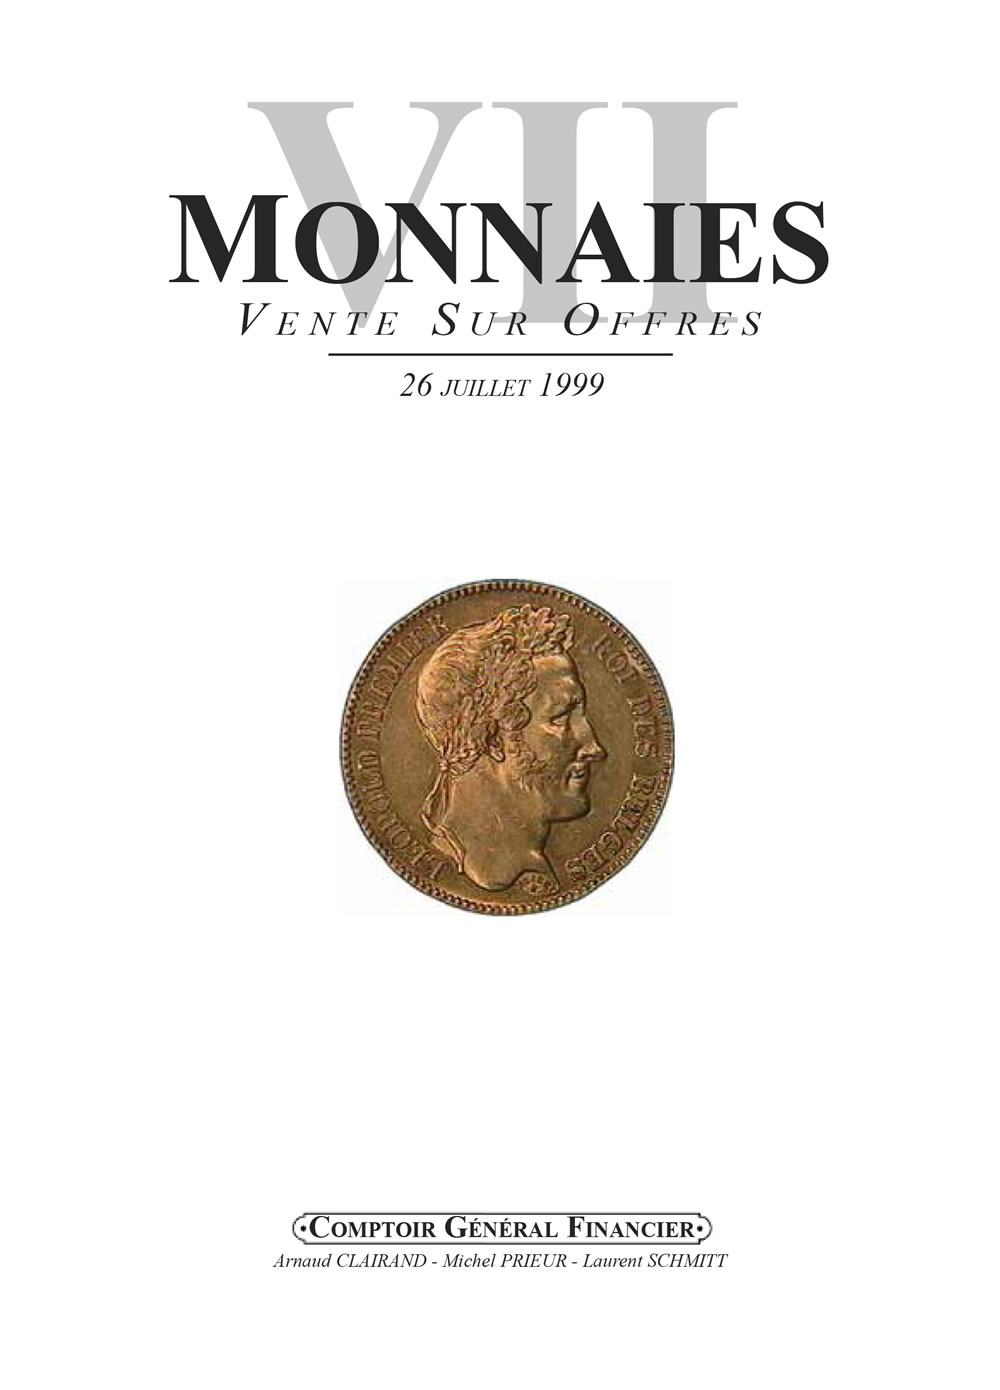 Monnaies 7 PRIEUR Michel, SCHMITT Laurent